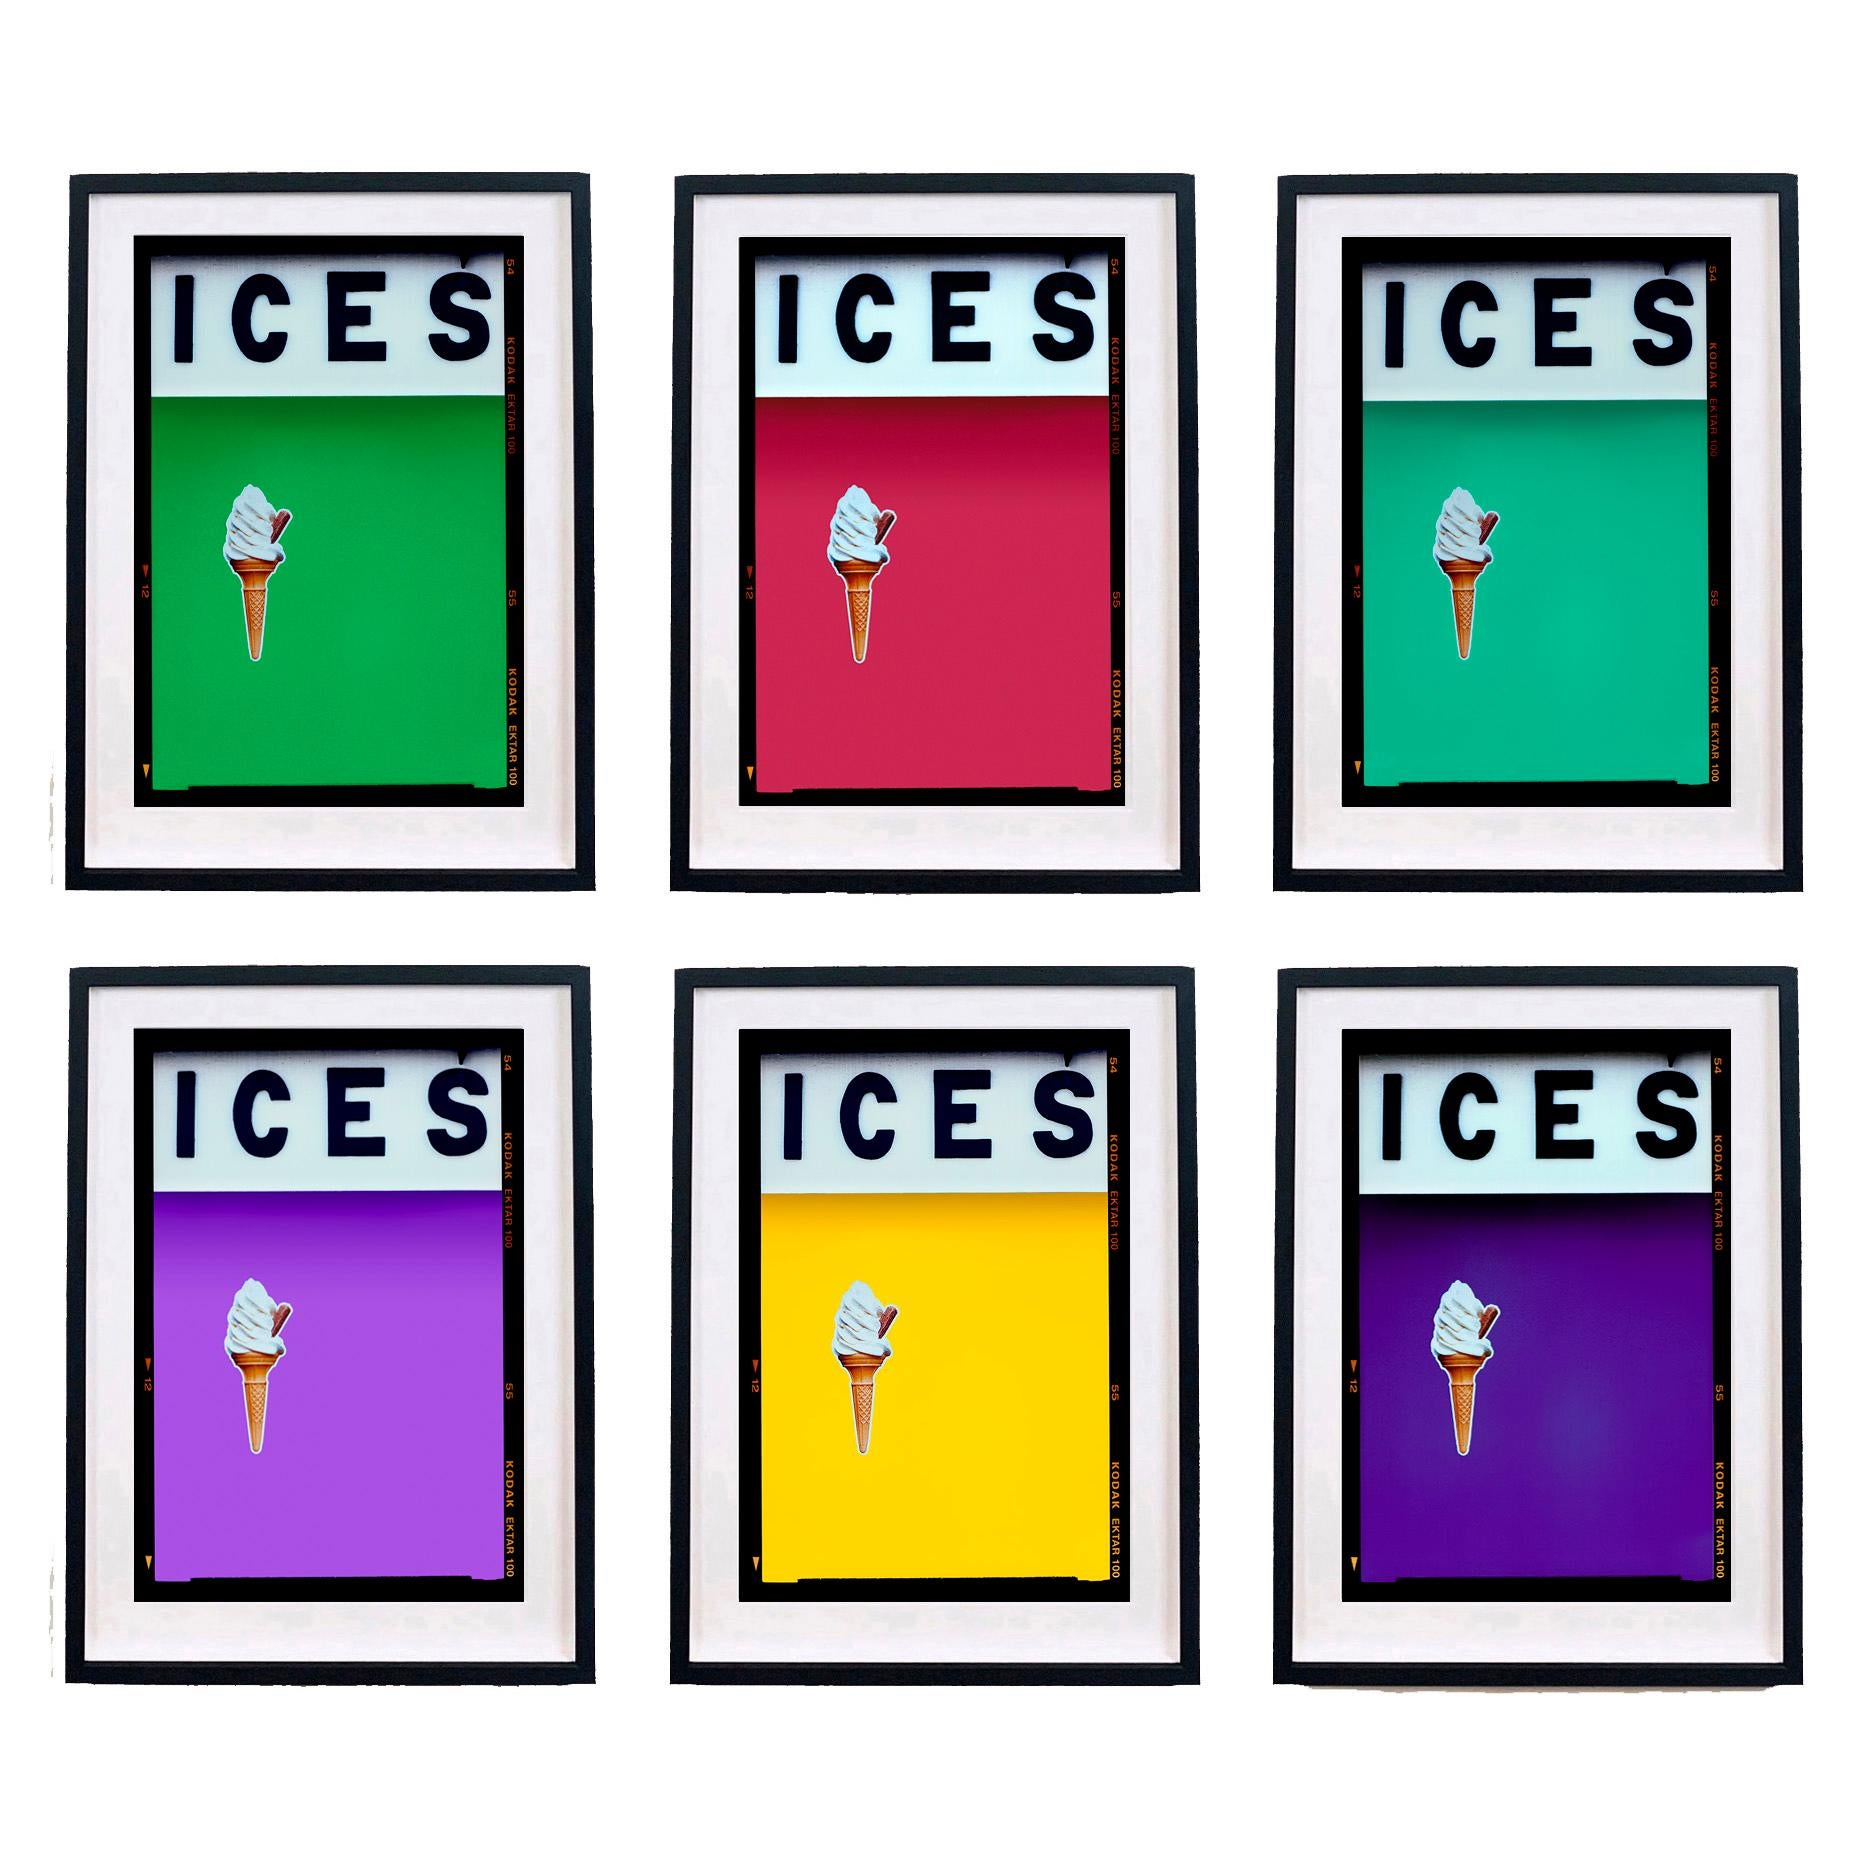 Richard Heeps Print - ICES - Six Framed Artworks - Pop Art Color Photography